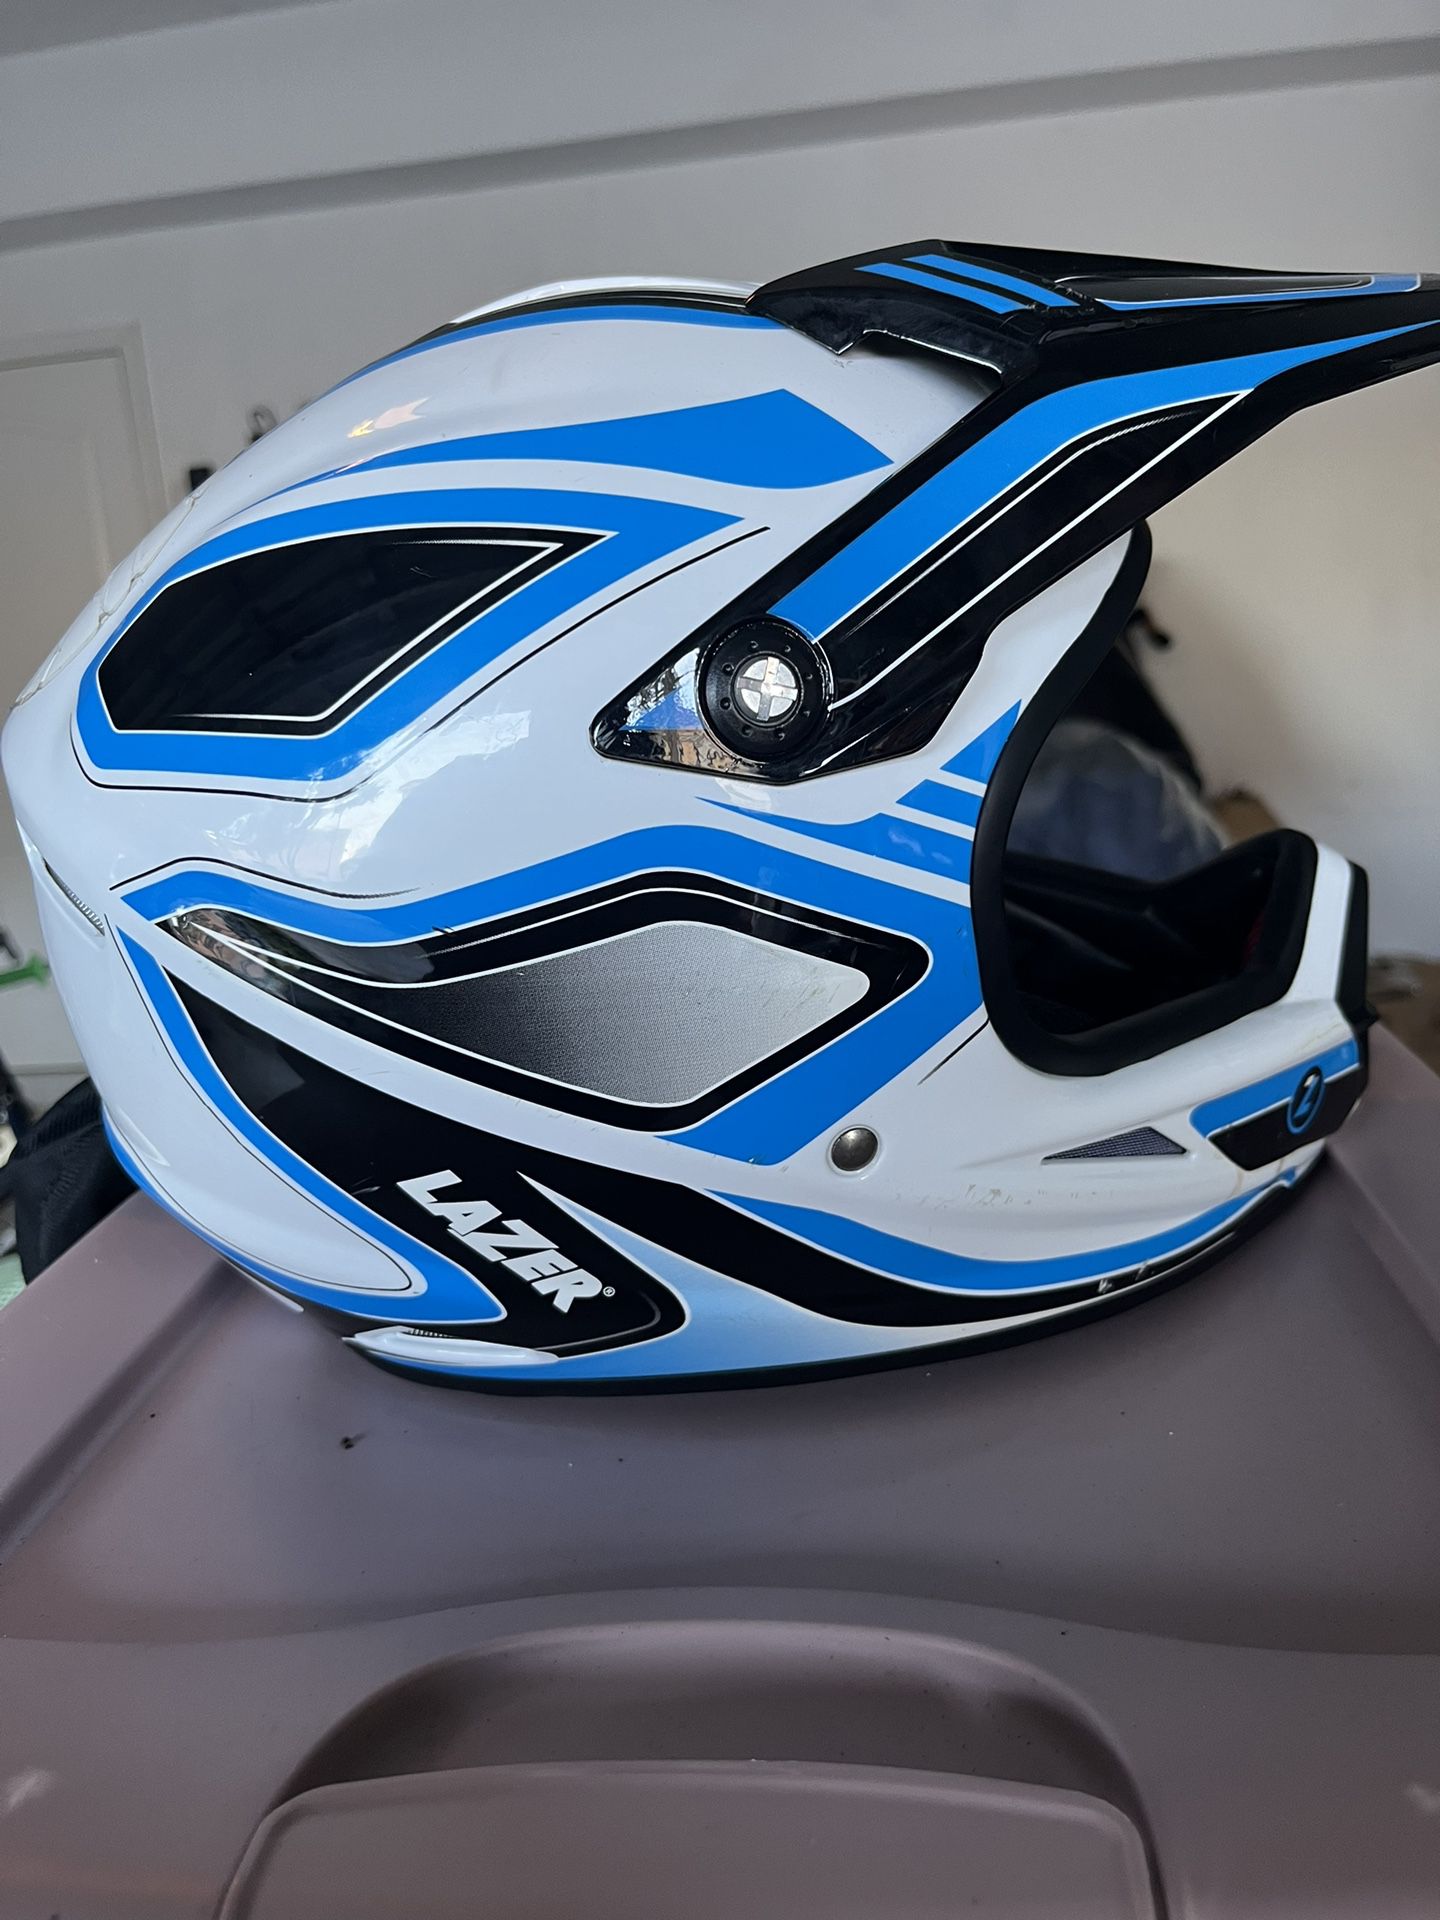 BMX Racing Helmet 